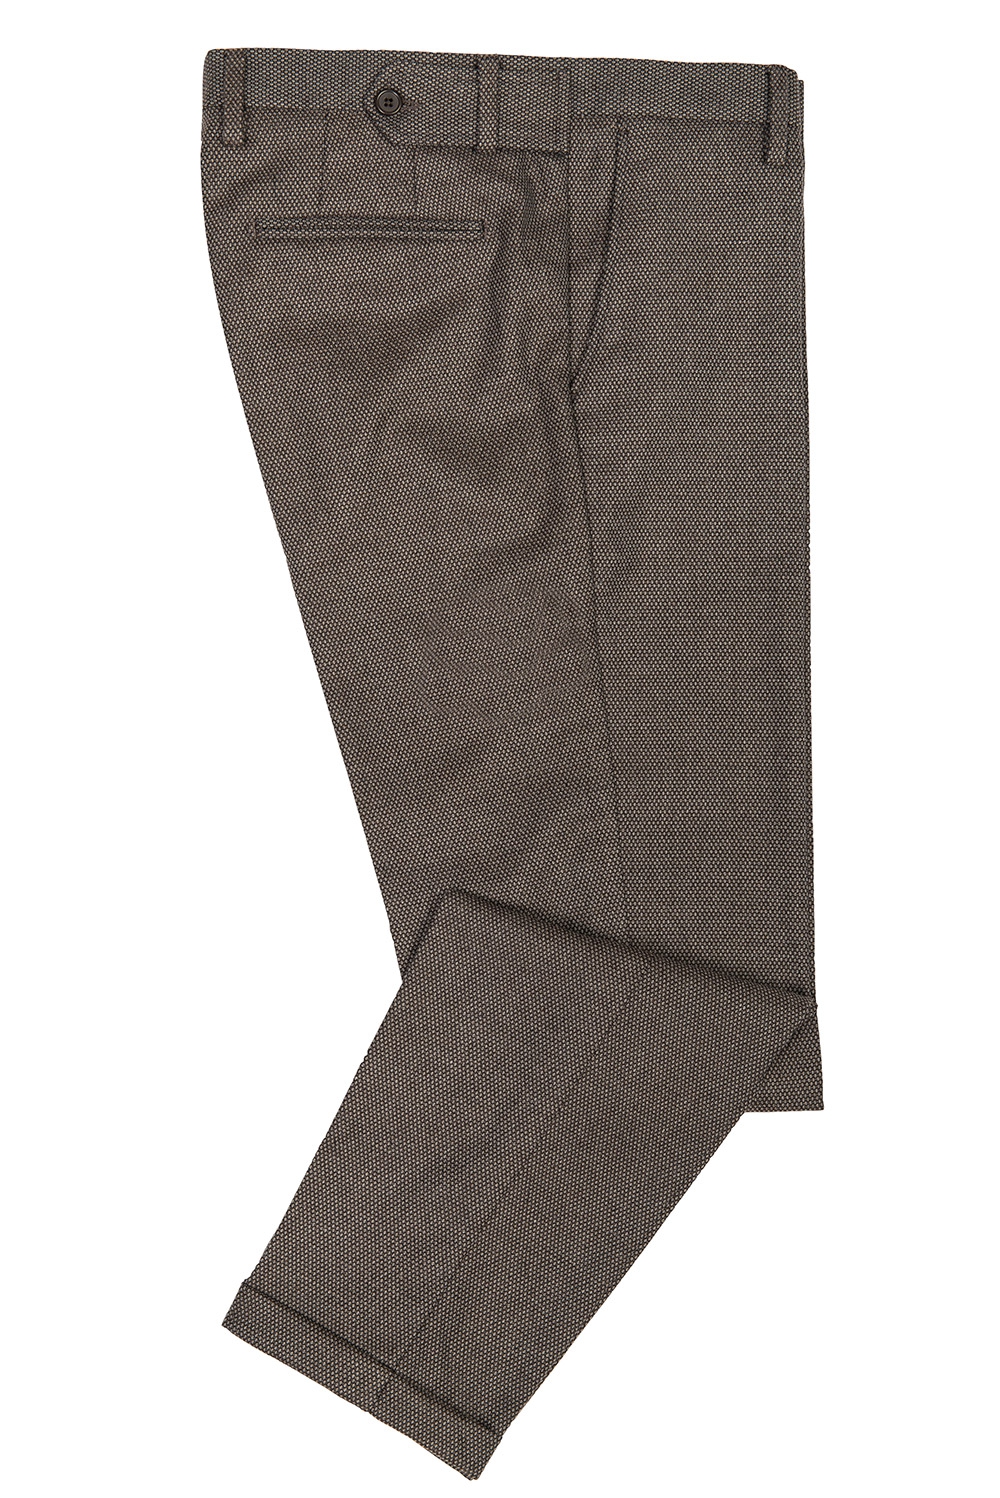 Pantaloni slim maro print geometric 0